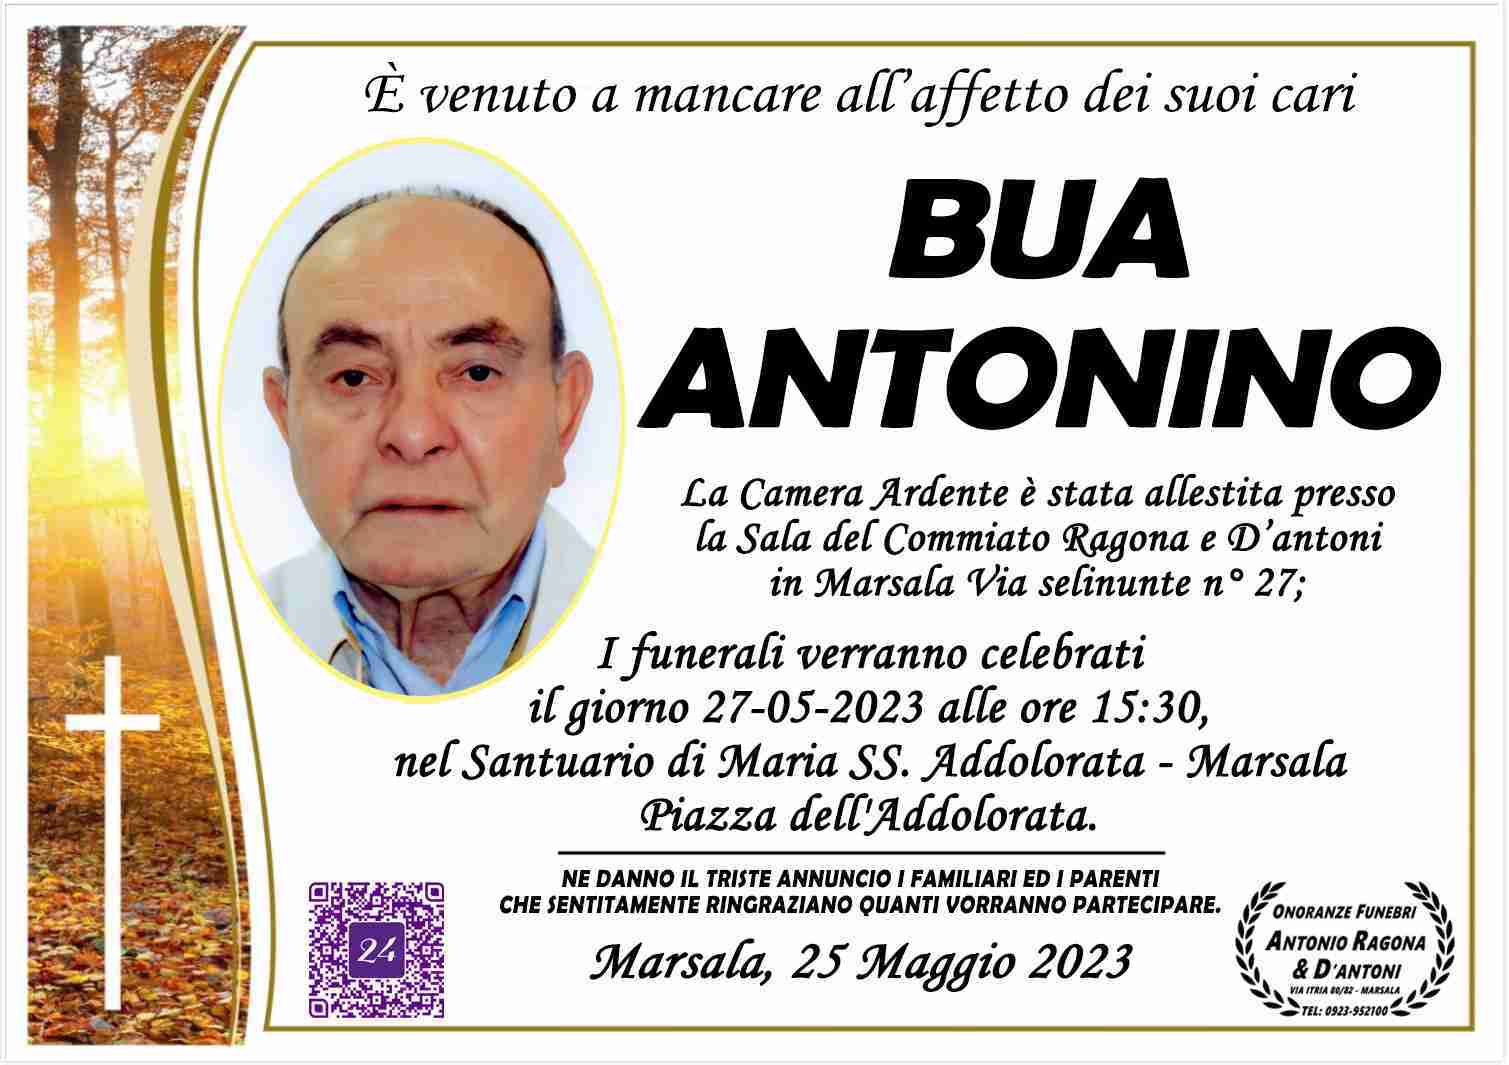 Antonino Bua